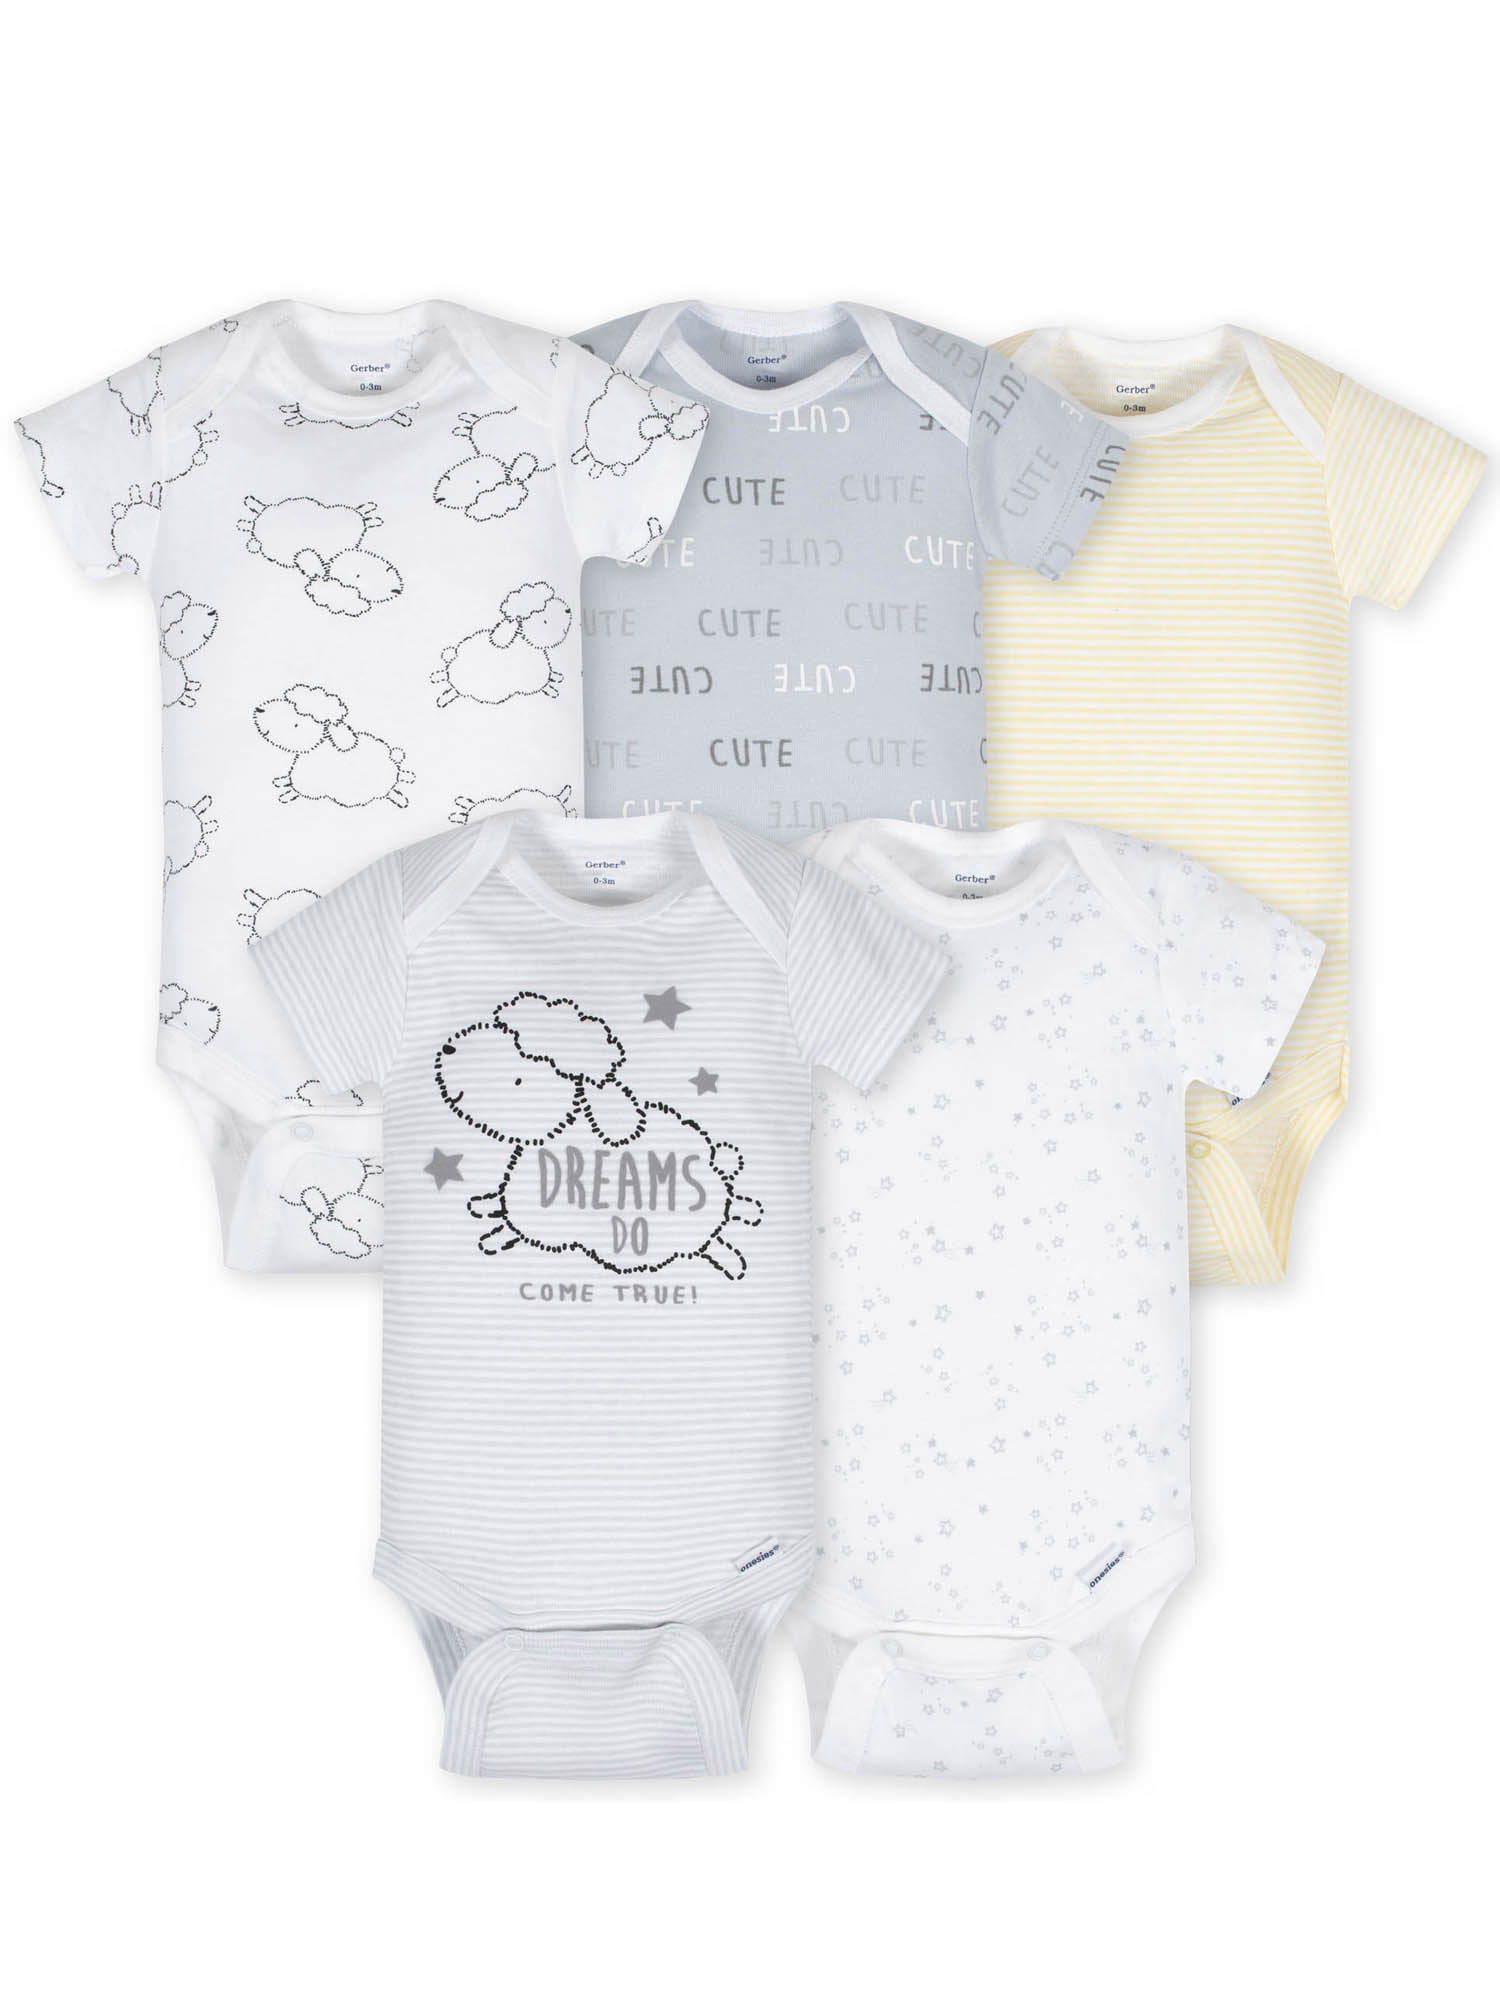 GERBER BABY BOY Organic Cotton Onesies Bodysuits Variety 3-Pack LION NWT 